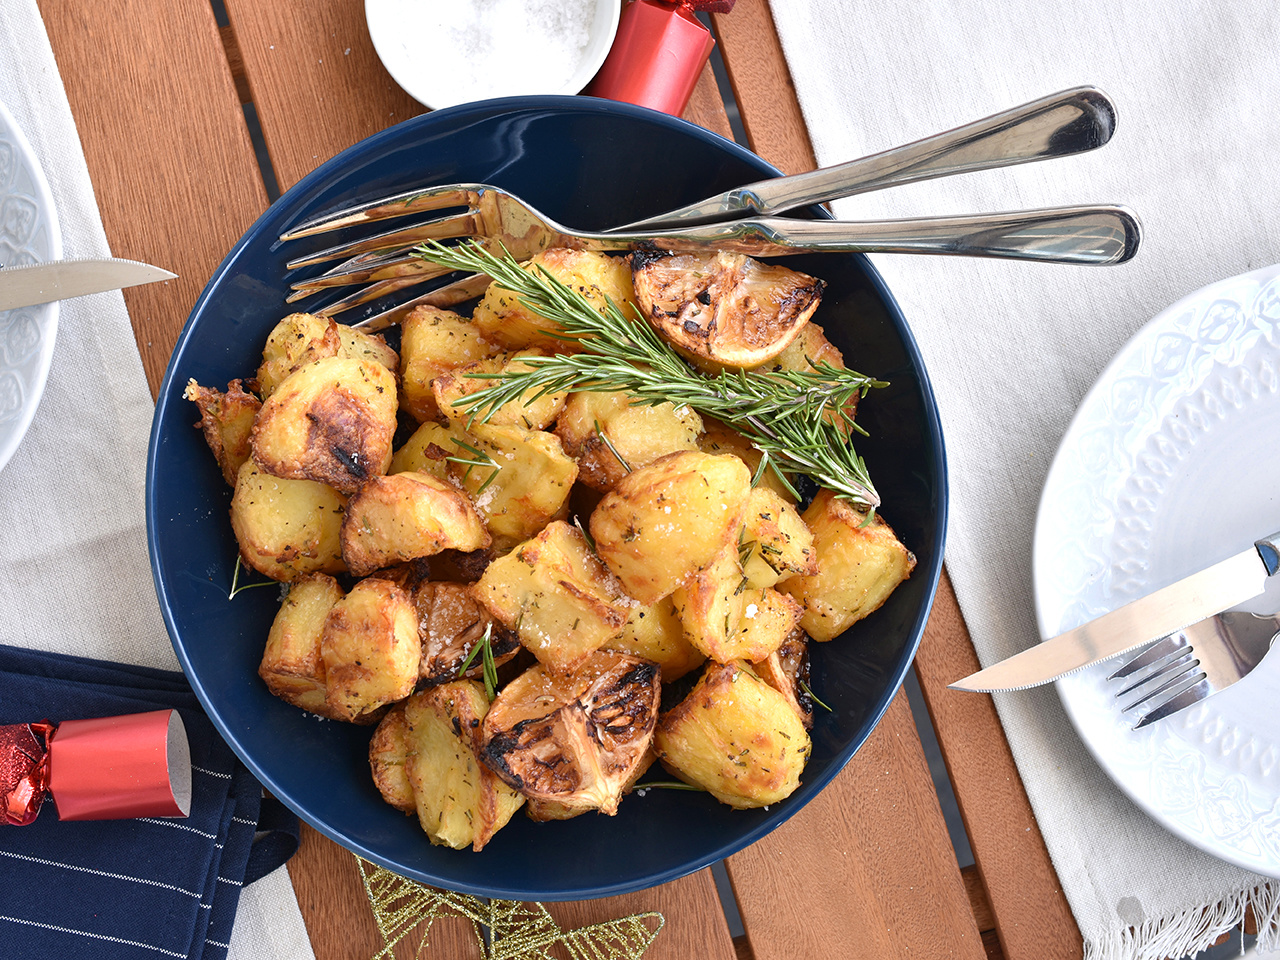  Crispy SA Roast Potatoes with Rosemary Salt

